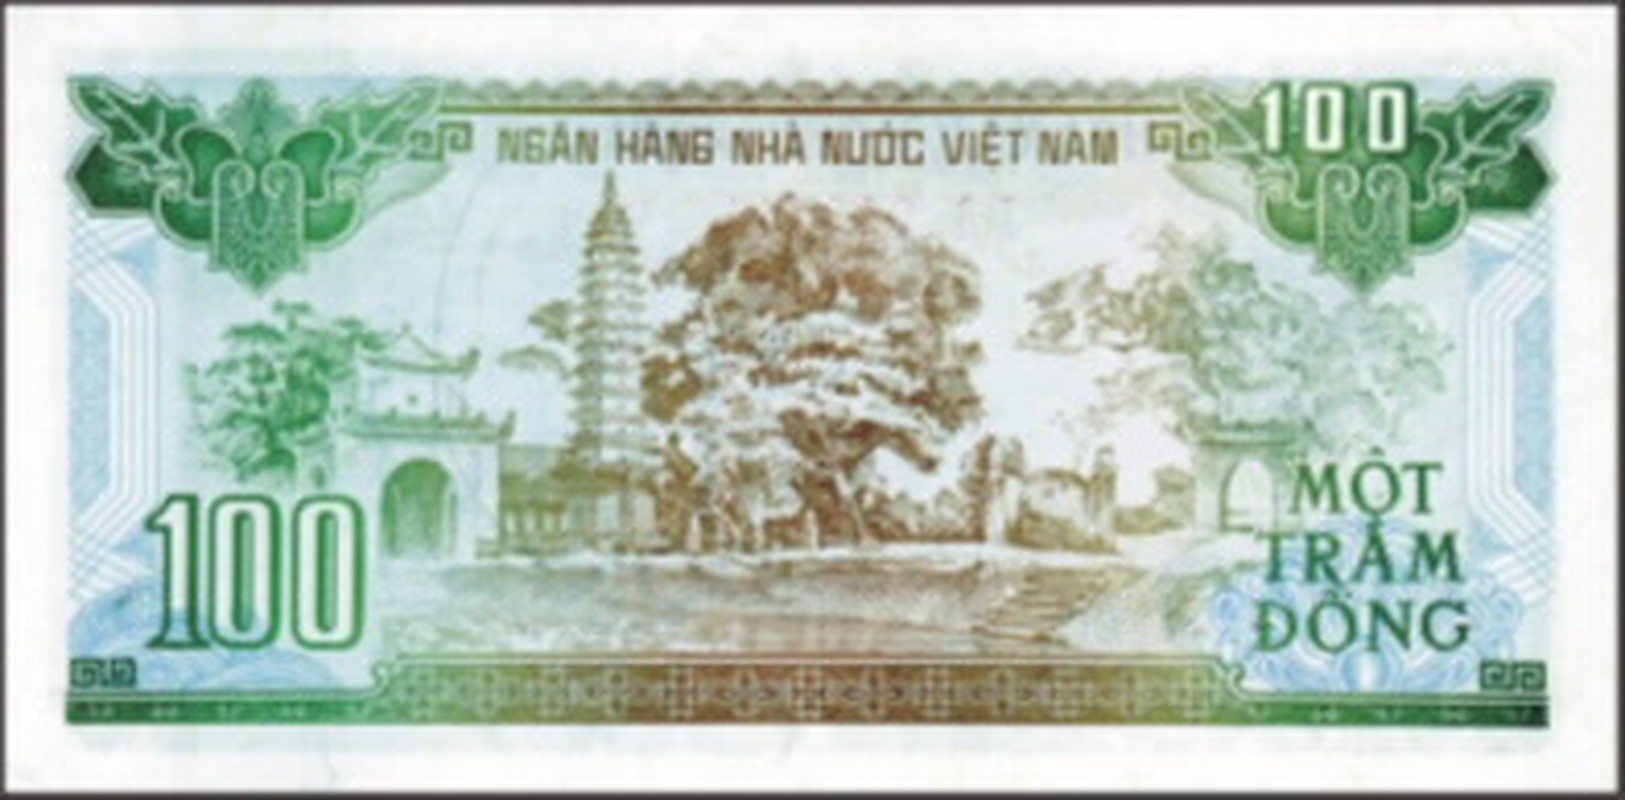 3 to tien giay cua Viet Nam dang luu hanh nhung hiem gap-Hinh-3